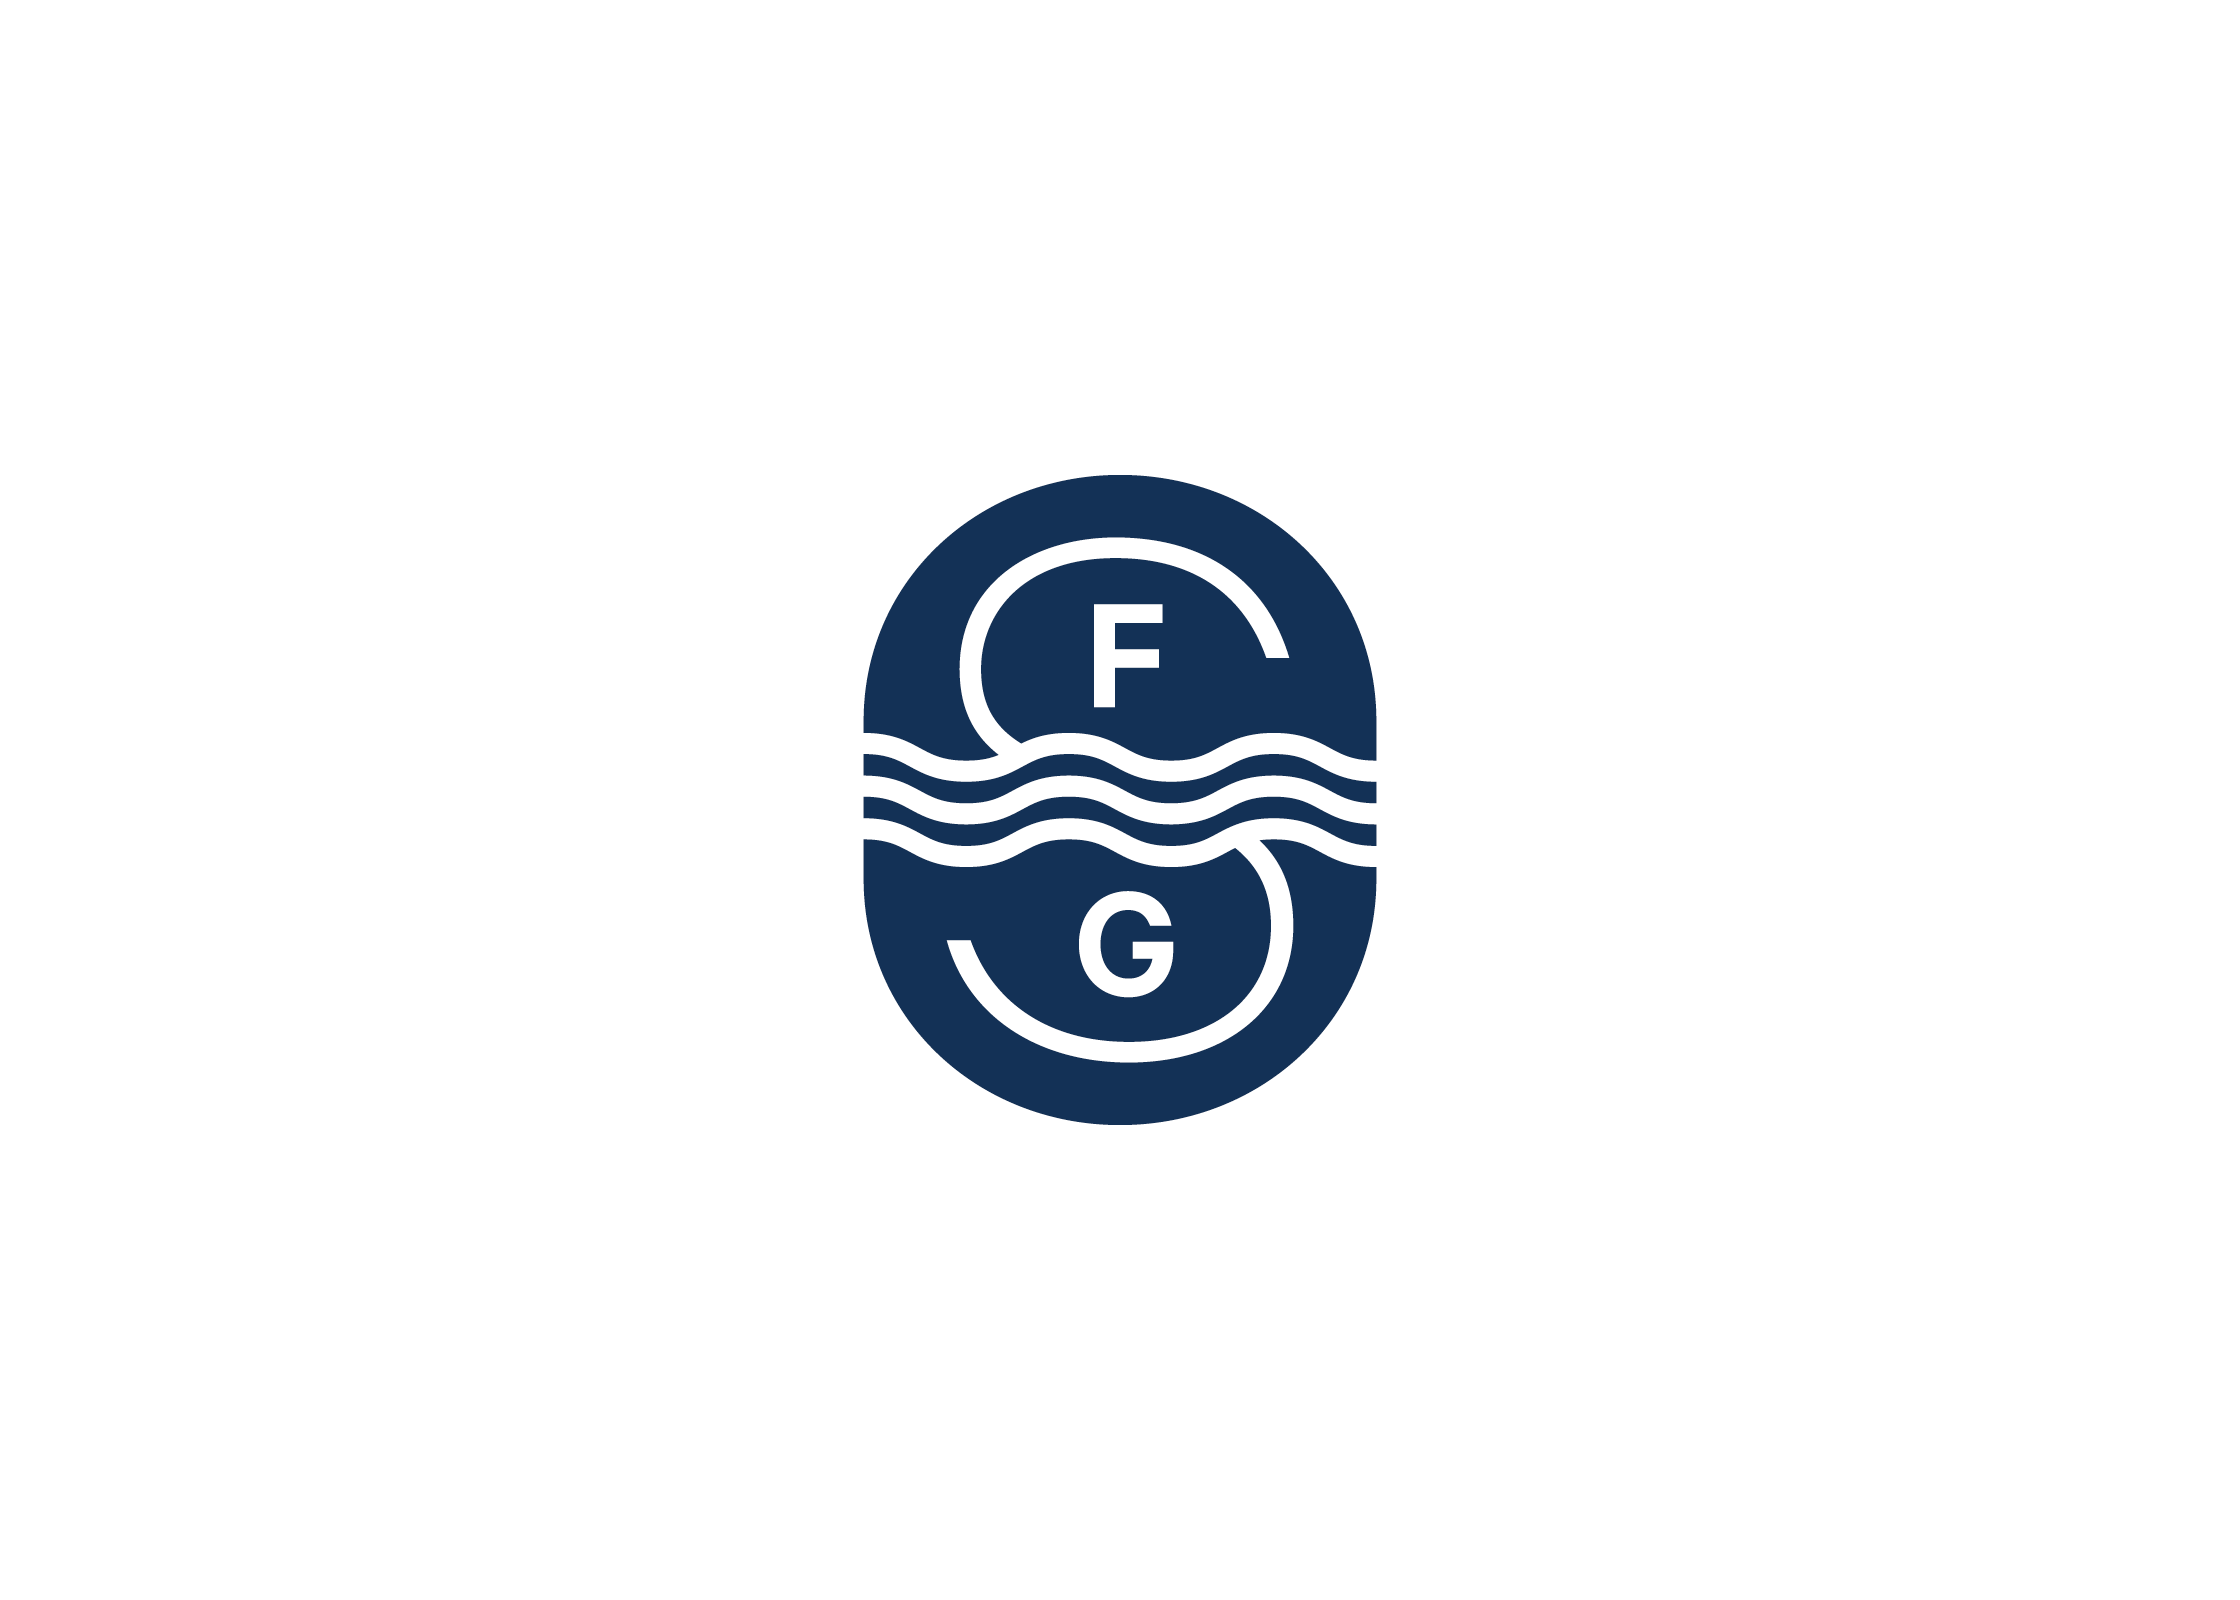 Municipal government logo; Francis G. Slay.